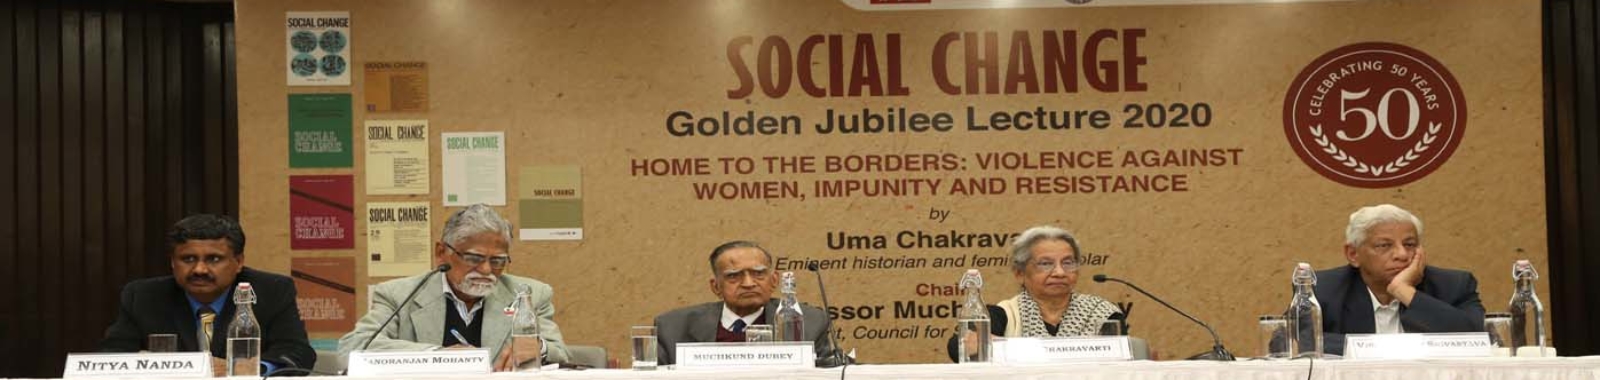 social-change-golden-jubilee-lecture-2020-1